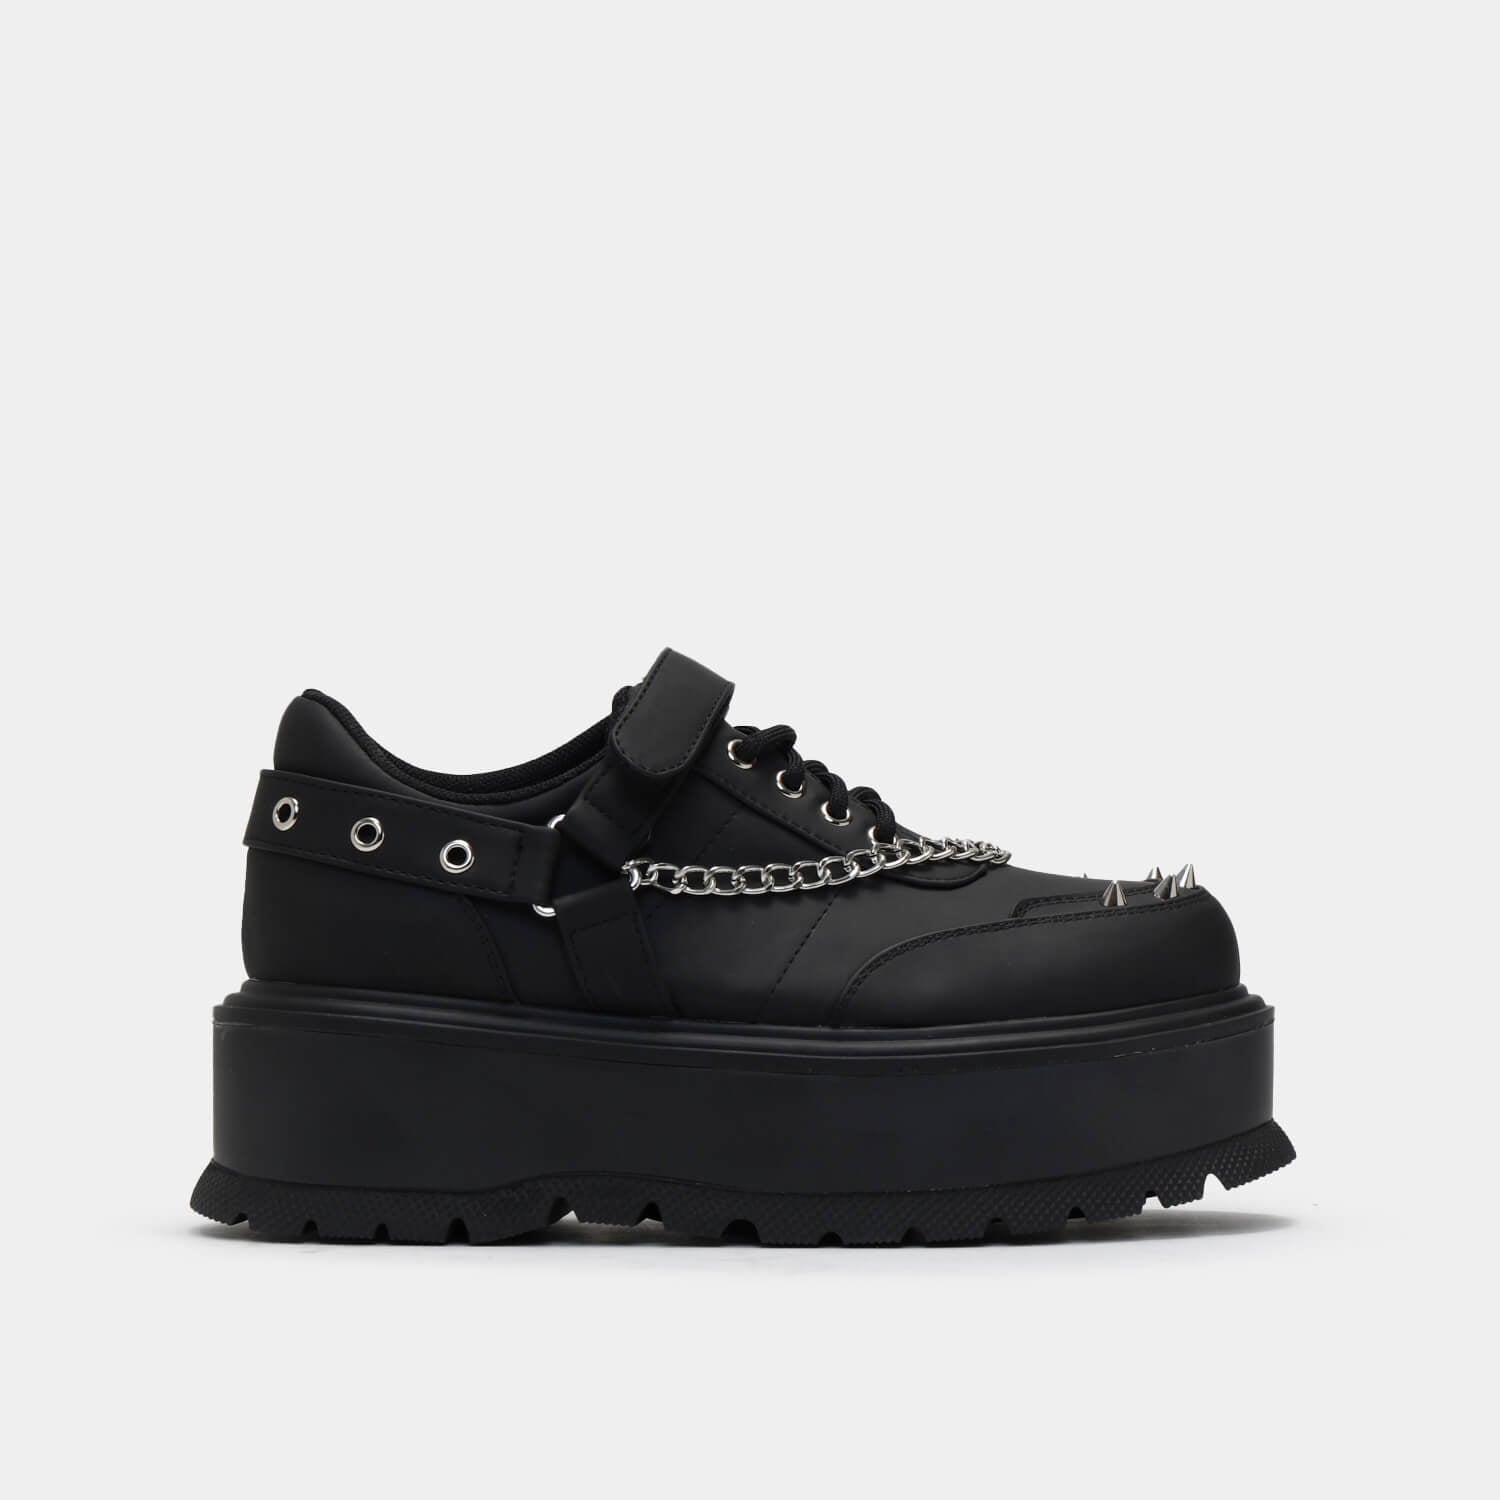 Retrograde Rebel Black Platform Shoes - Shoes - KOI Footwear - Black - Side View